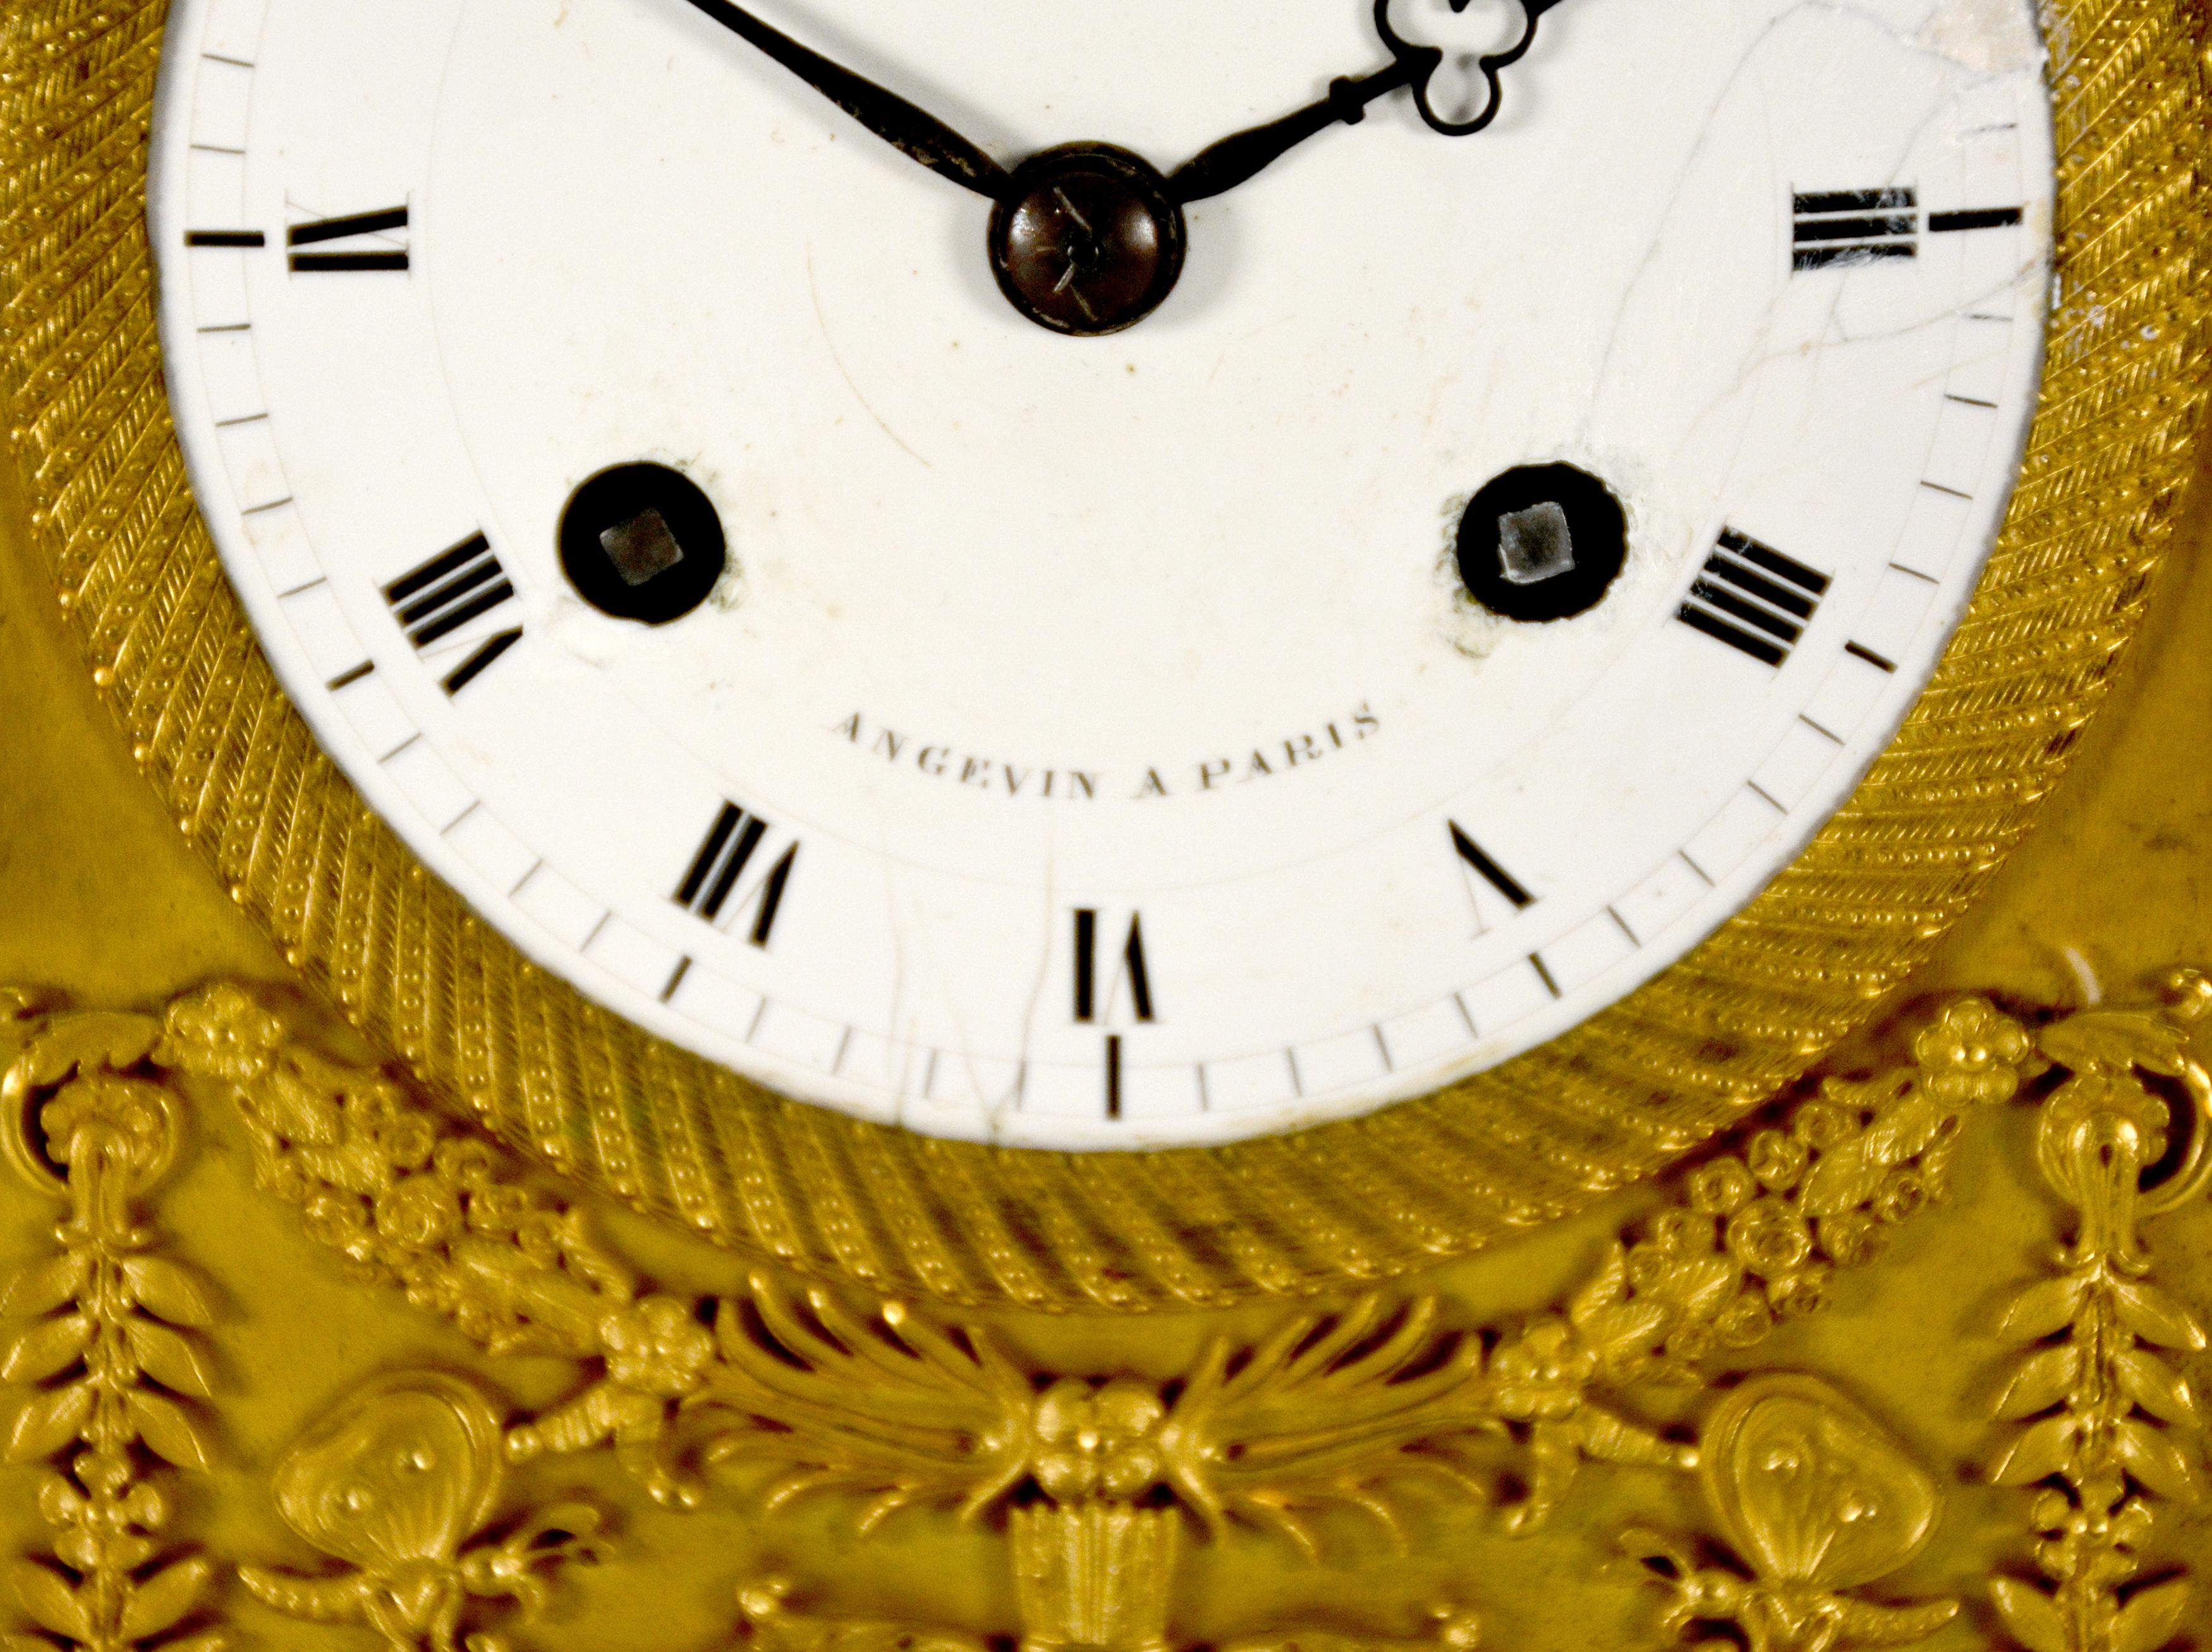 1880 French Silk Suspension Ormolu Empire Bronze Mantel Clock by Angevin A Paris For Sale 7